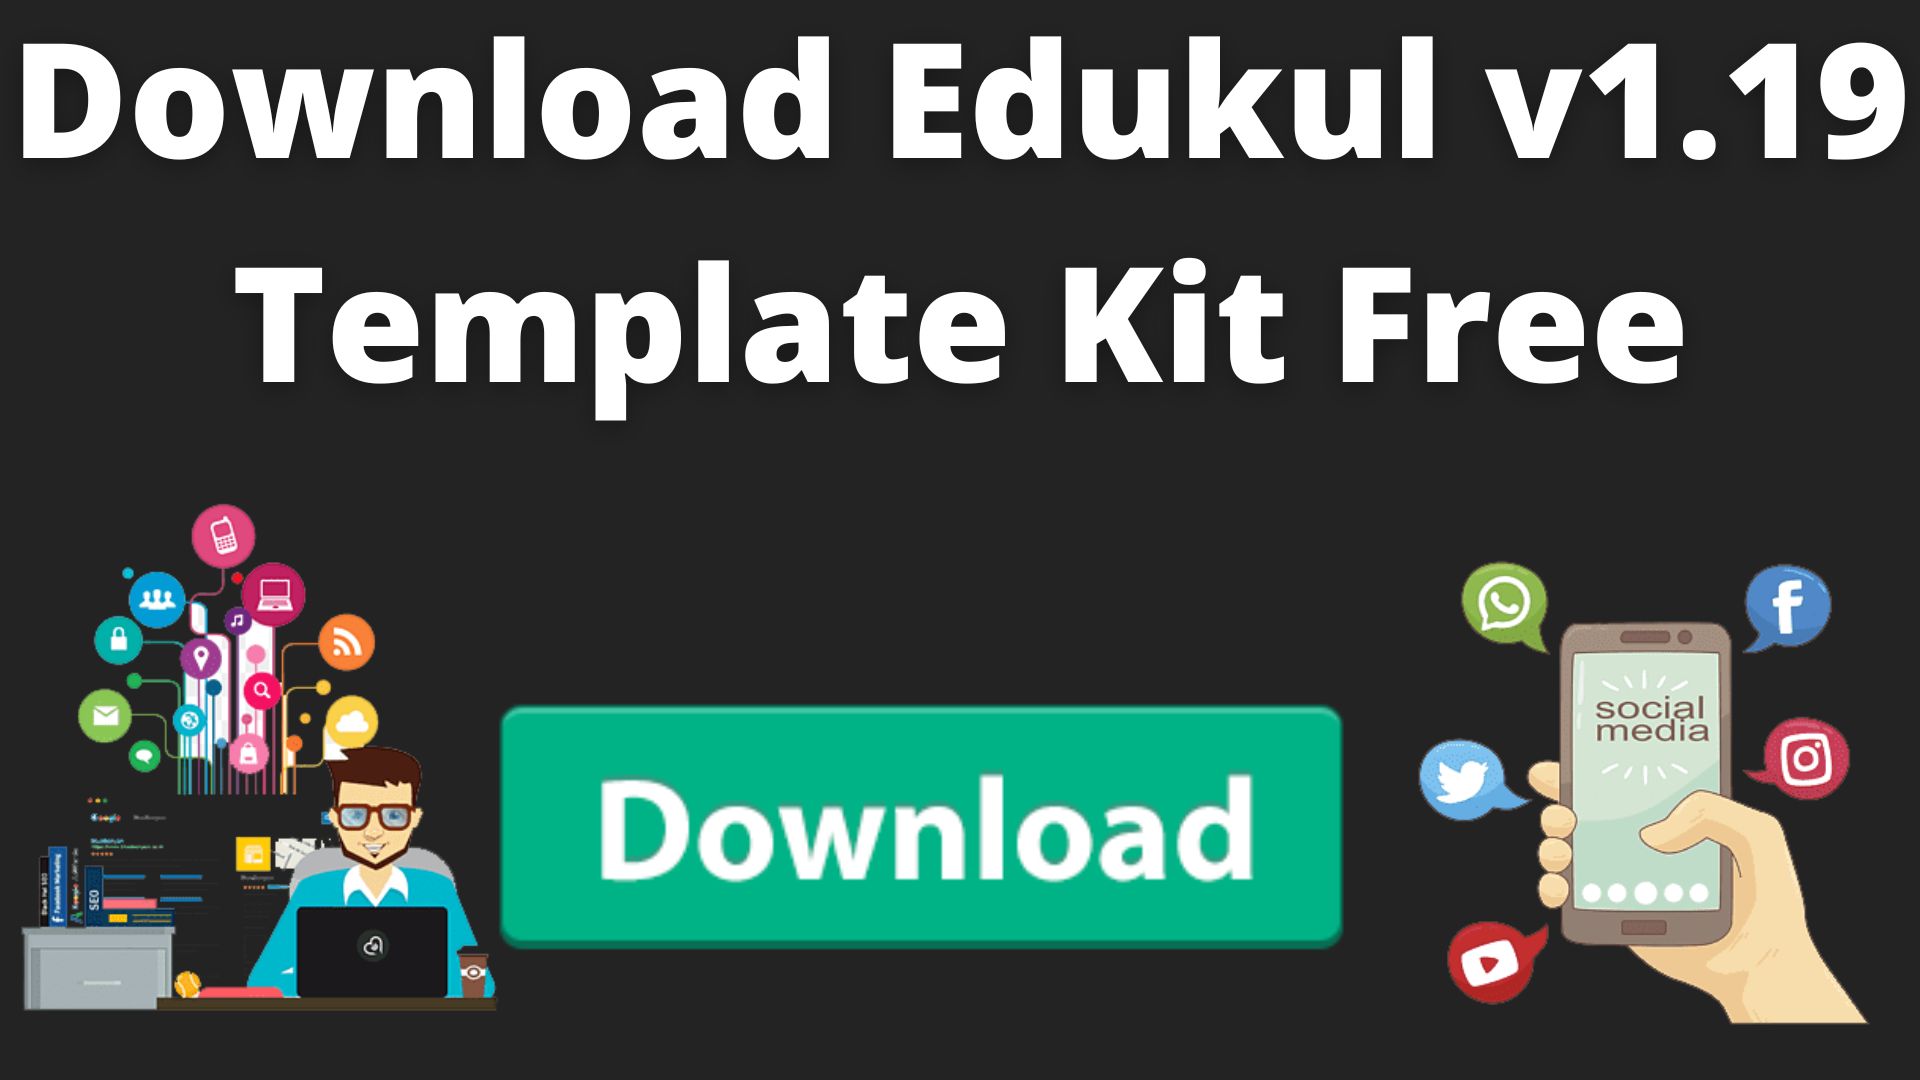 Download edukul v1. 19 template kit free